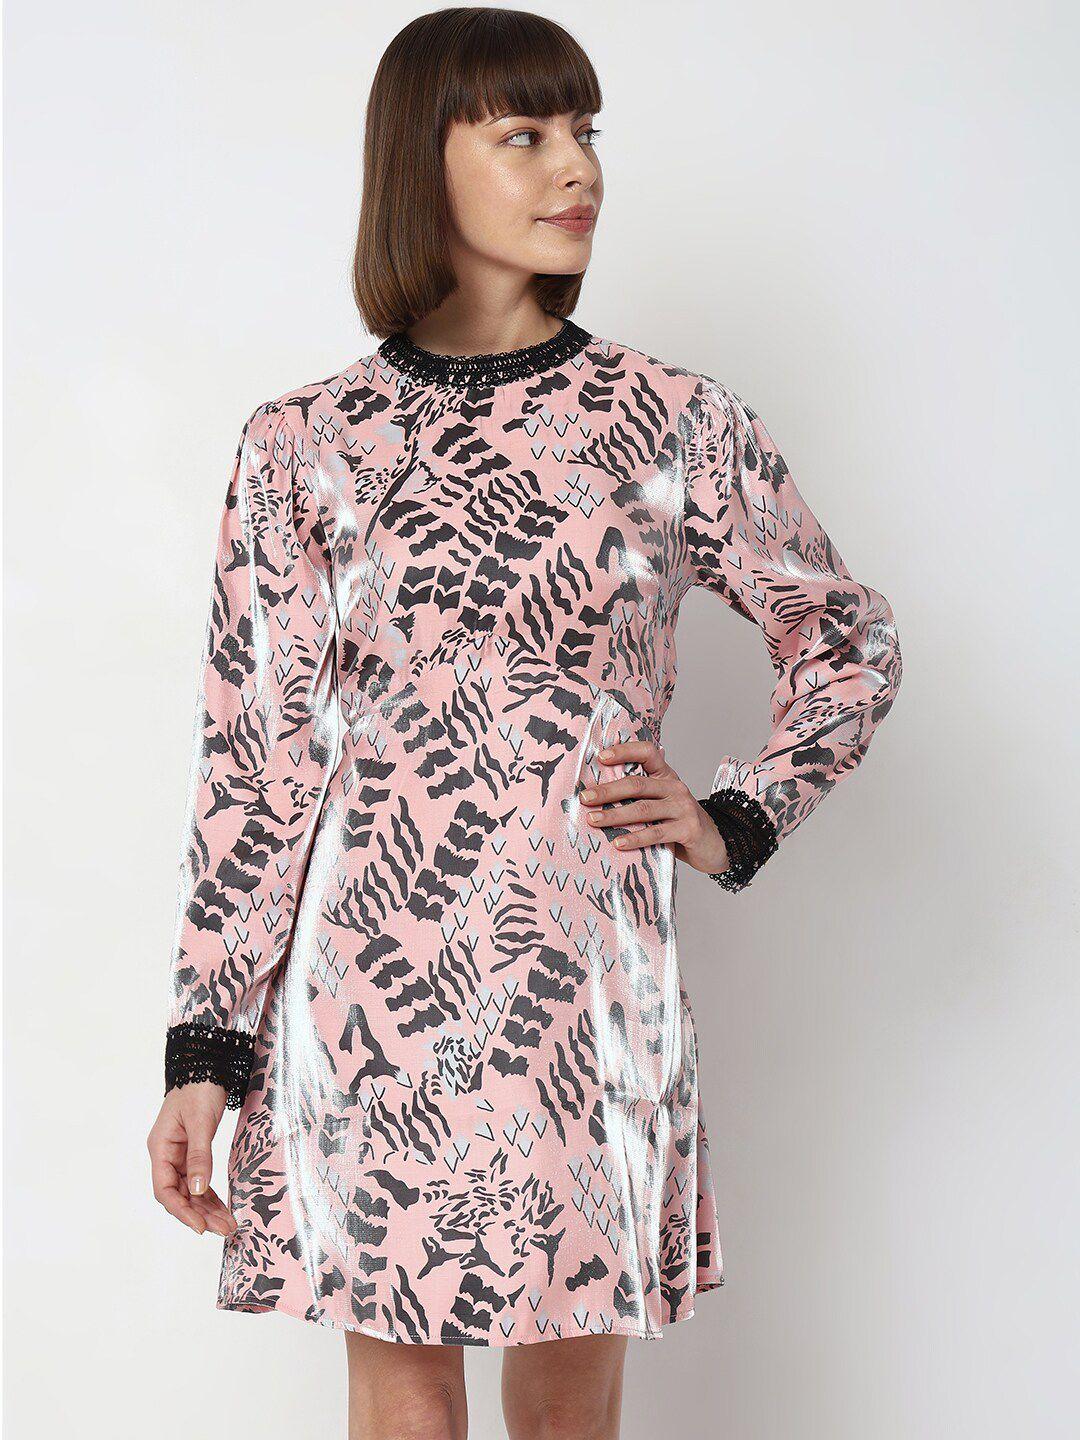 vero moda abstract printed a-line dress